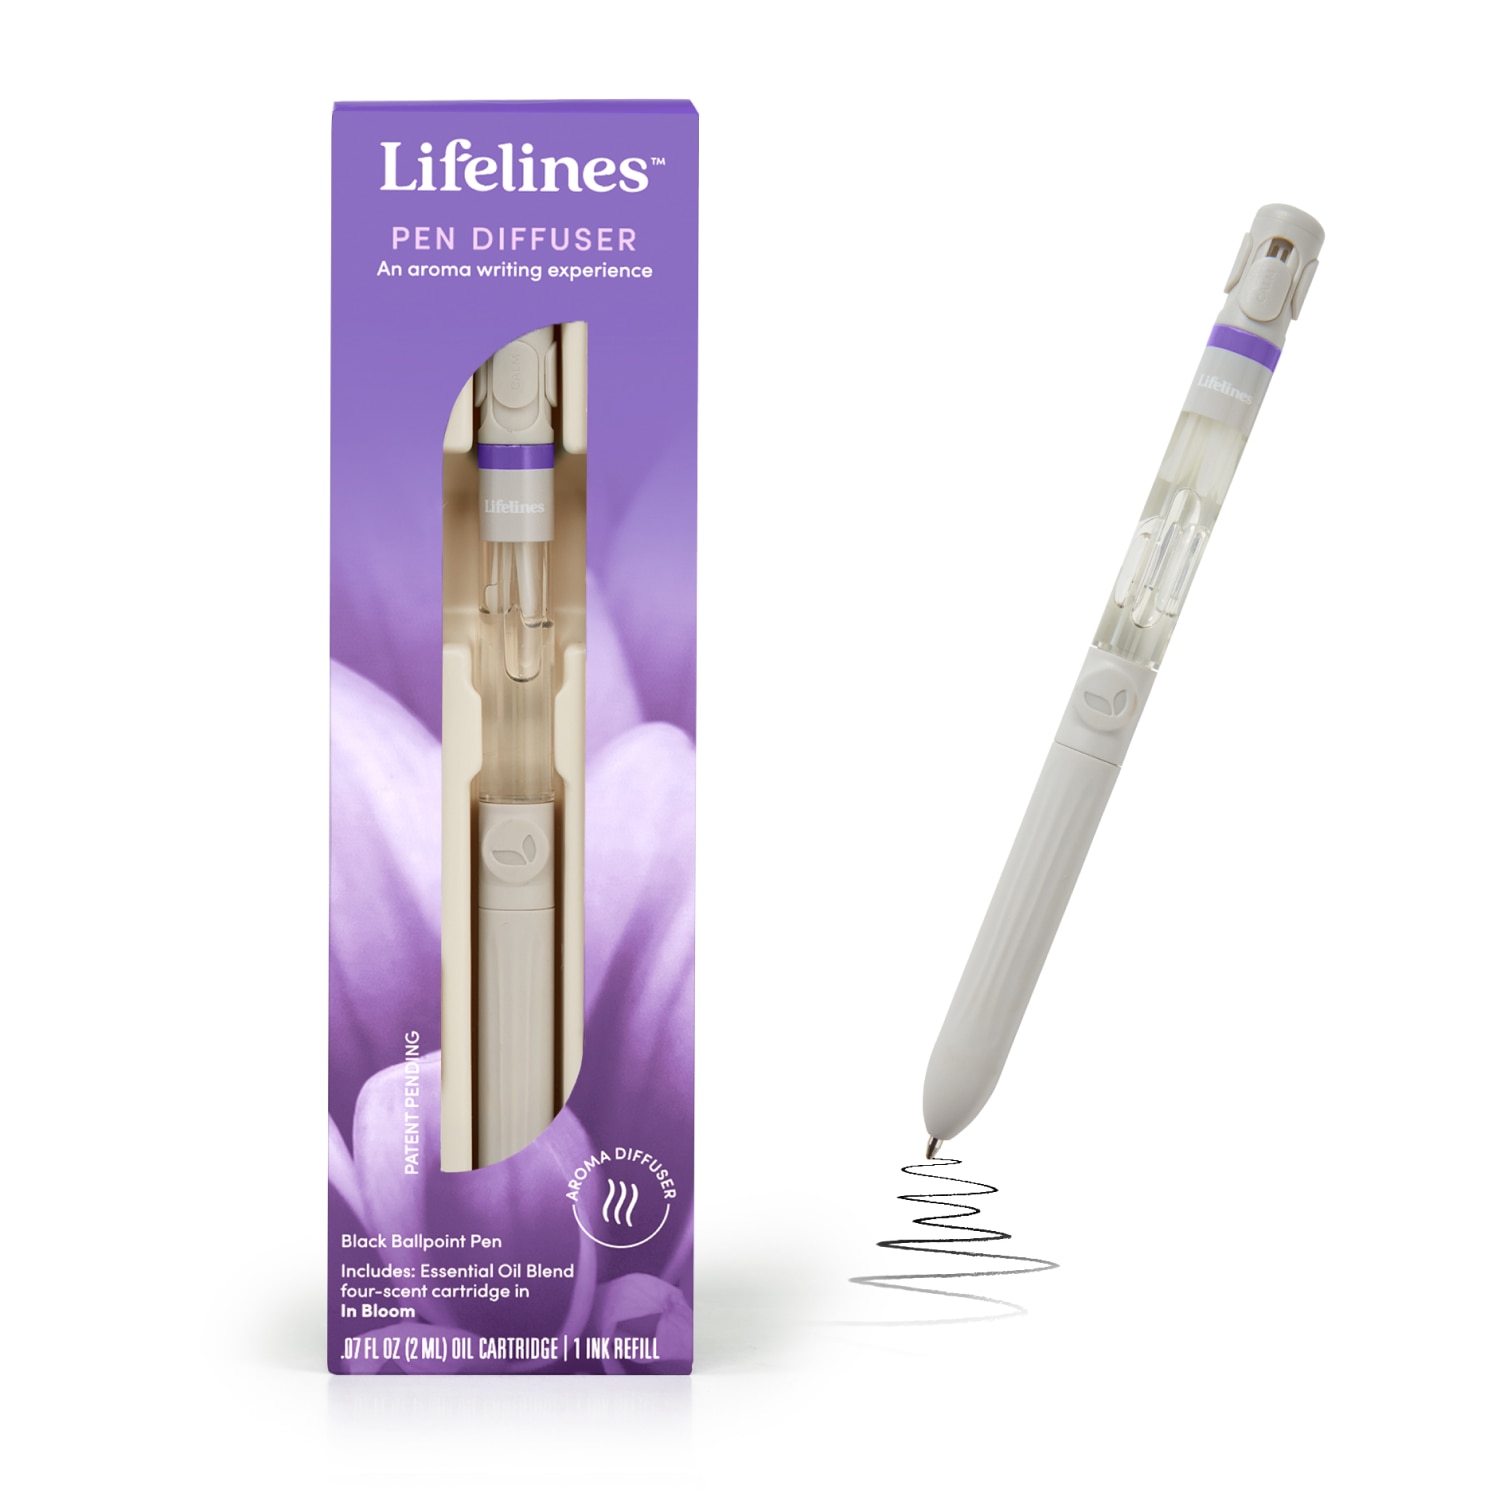 Lifelines Pen Diffuser with 4-Scent Cartridge in In Bloom